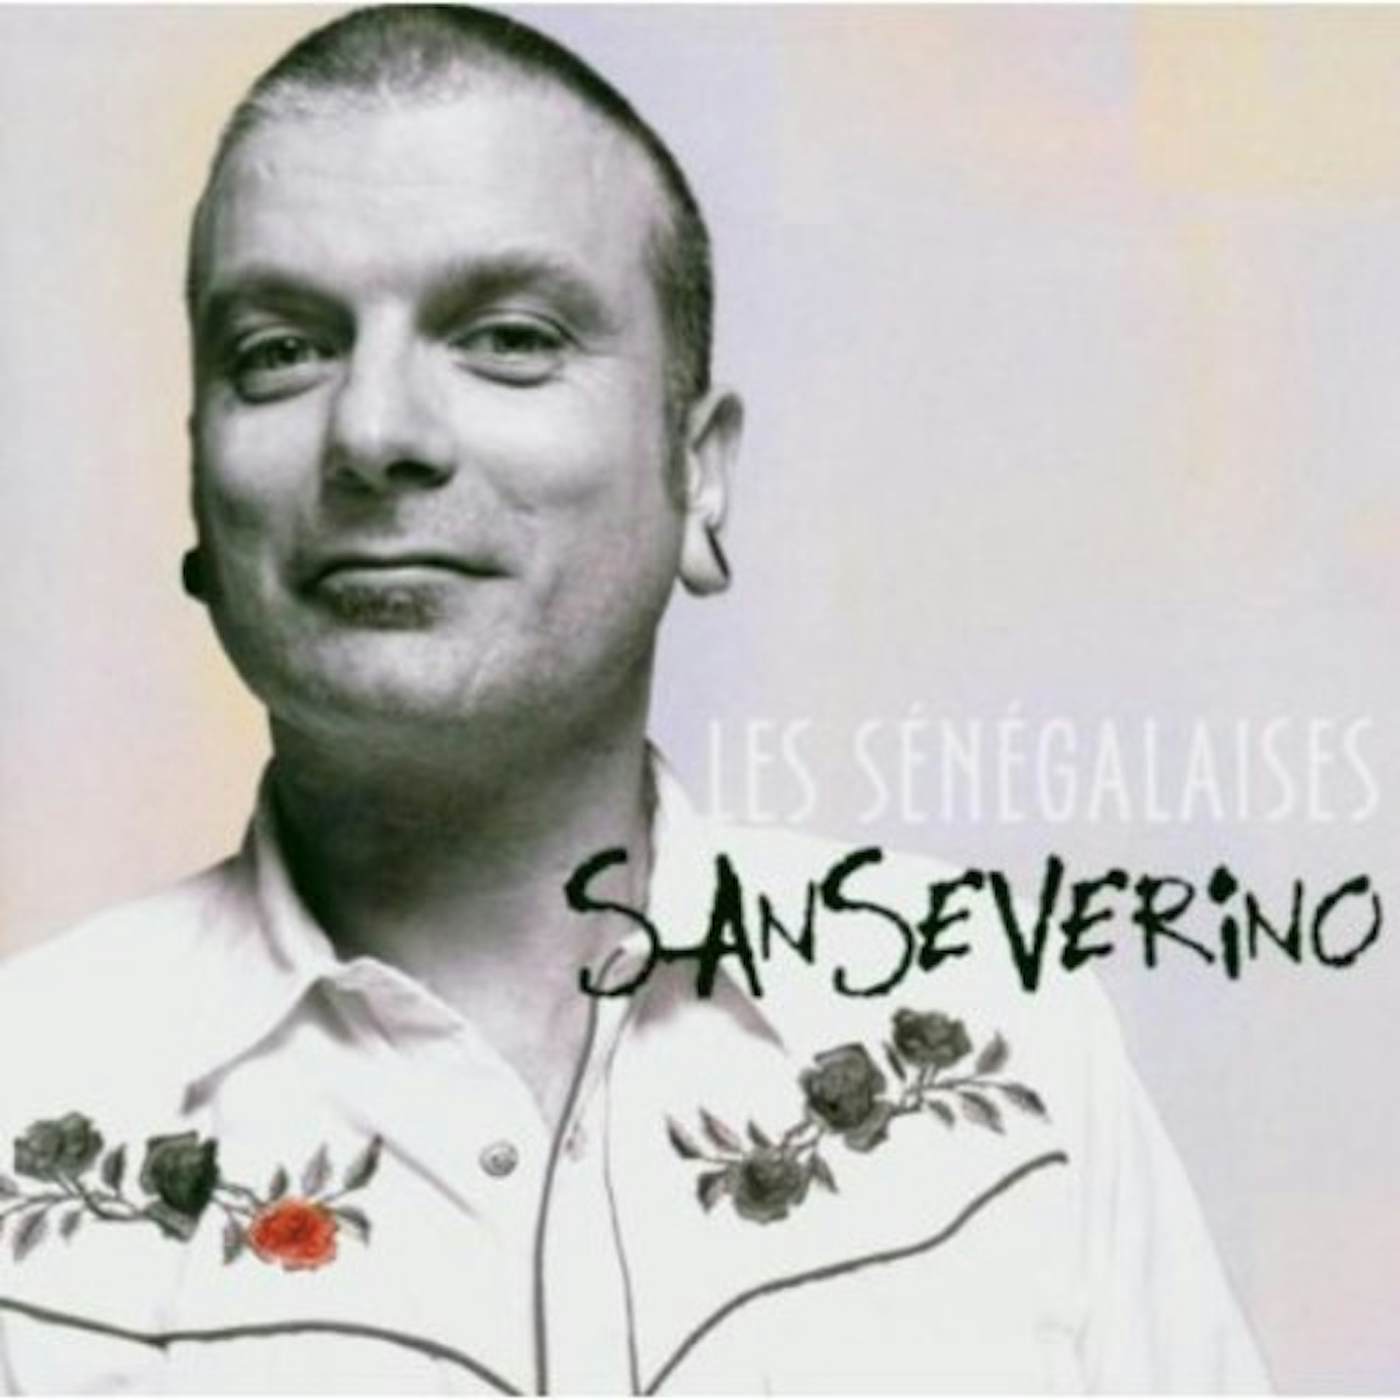 Sanseverino LES SENEGALAISES CD